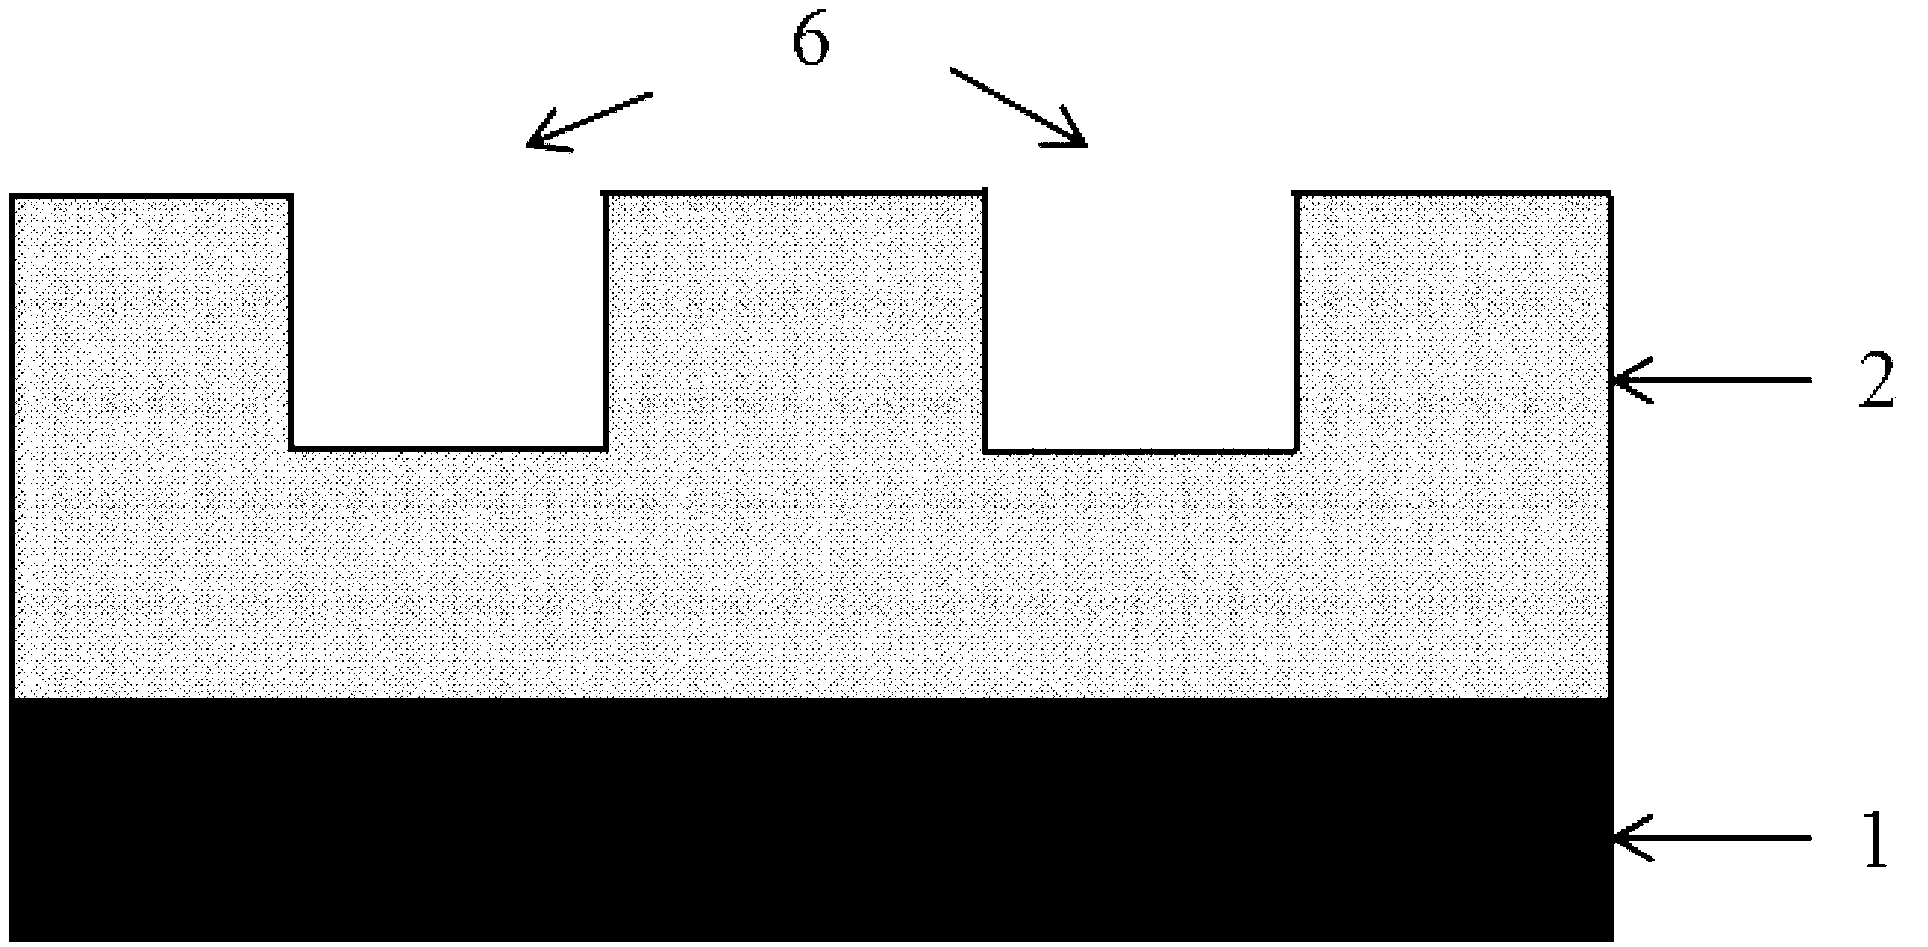 Groove-preferential dual-damascene copper-connection method reducing redundant metal coupling capacitance